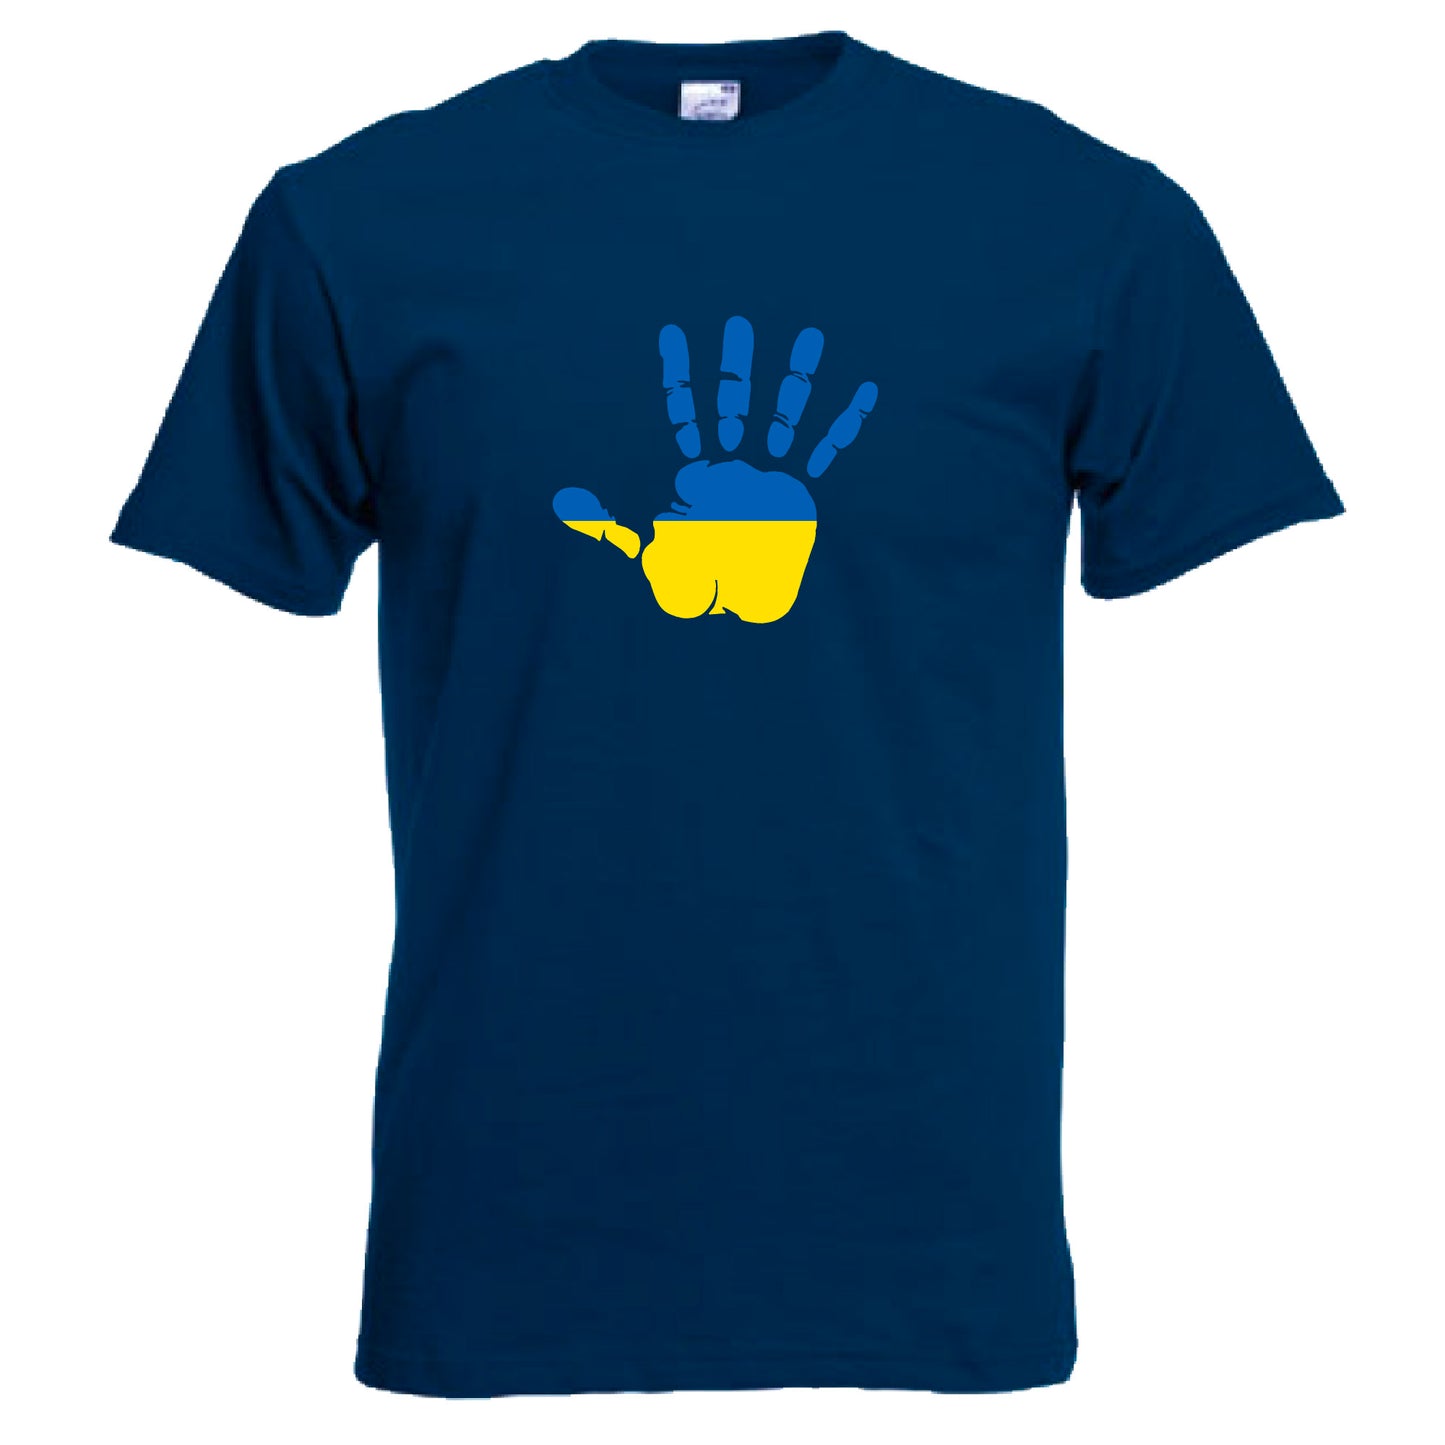 INDIGOS UG - T-Shirt Herren - Ukraine - Hand - Fussball